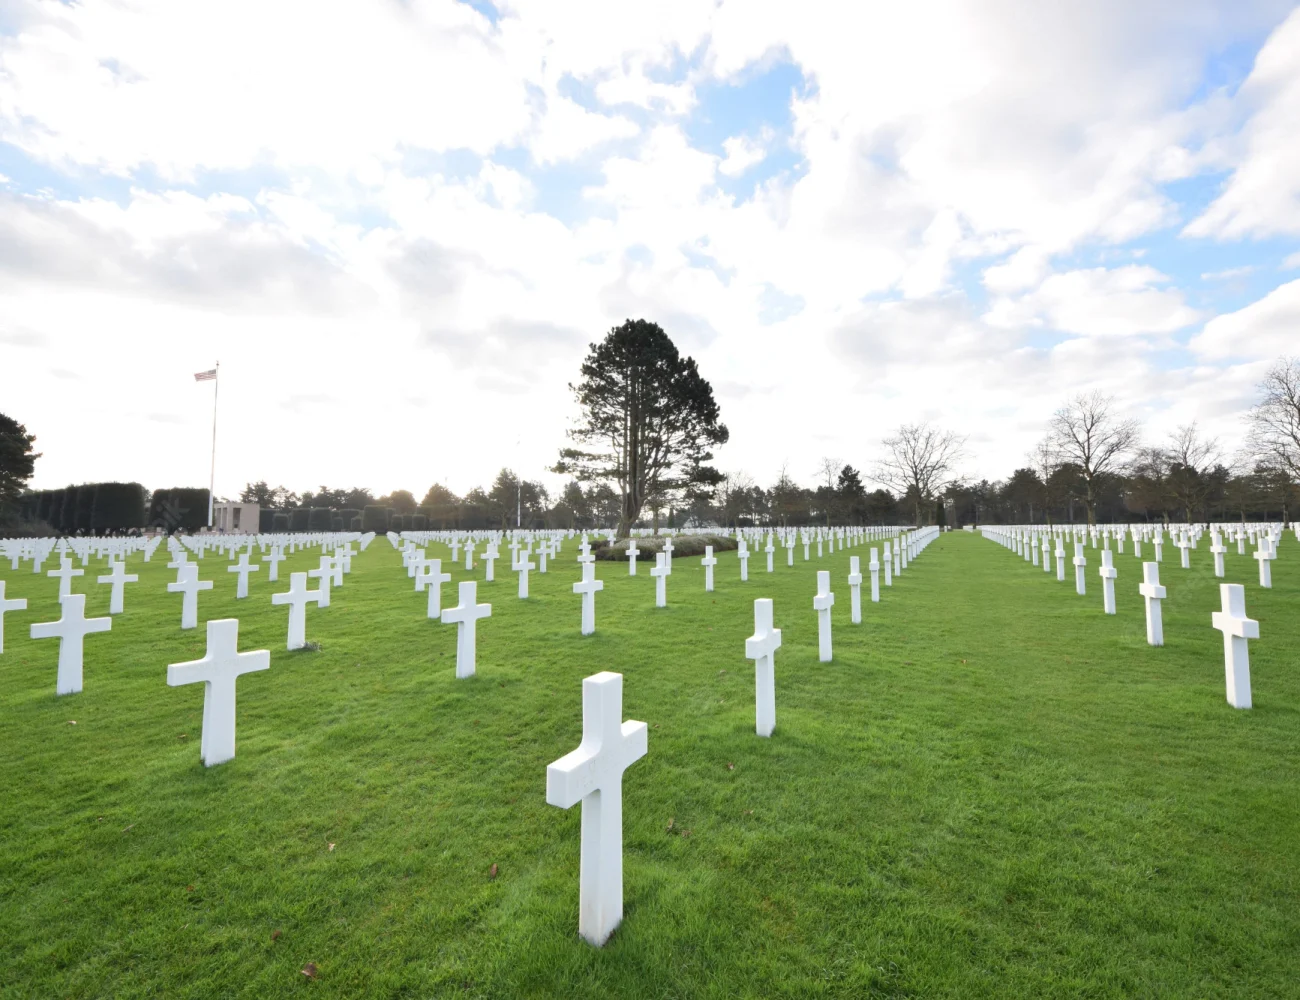 escenografia-cementerio-soldados-que-murieron-segunda-guerra-mundial-normandia_181624-8780